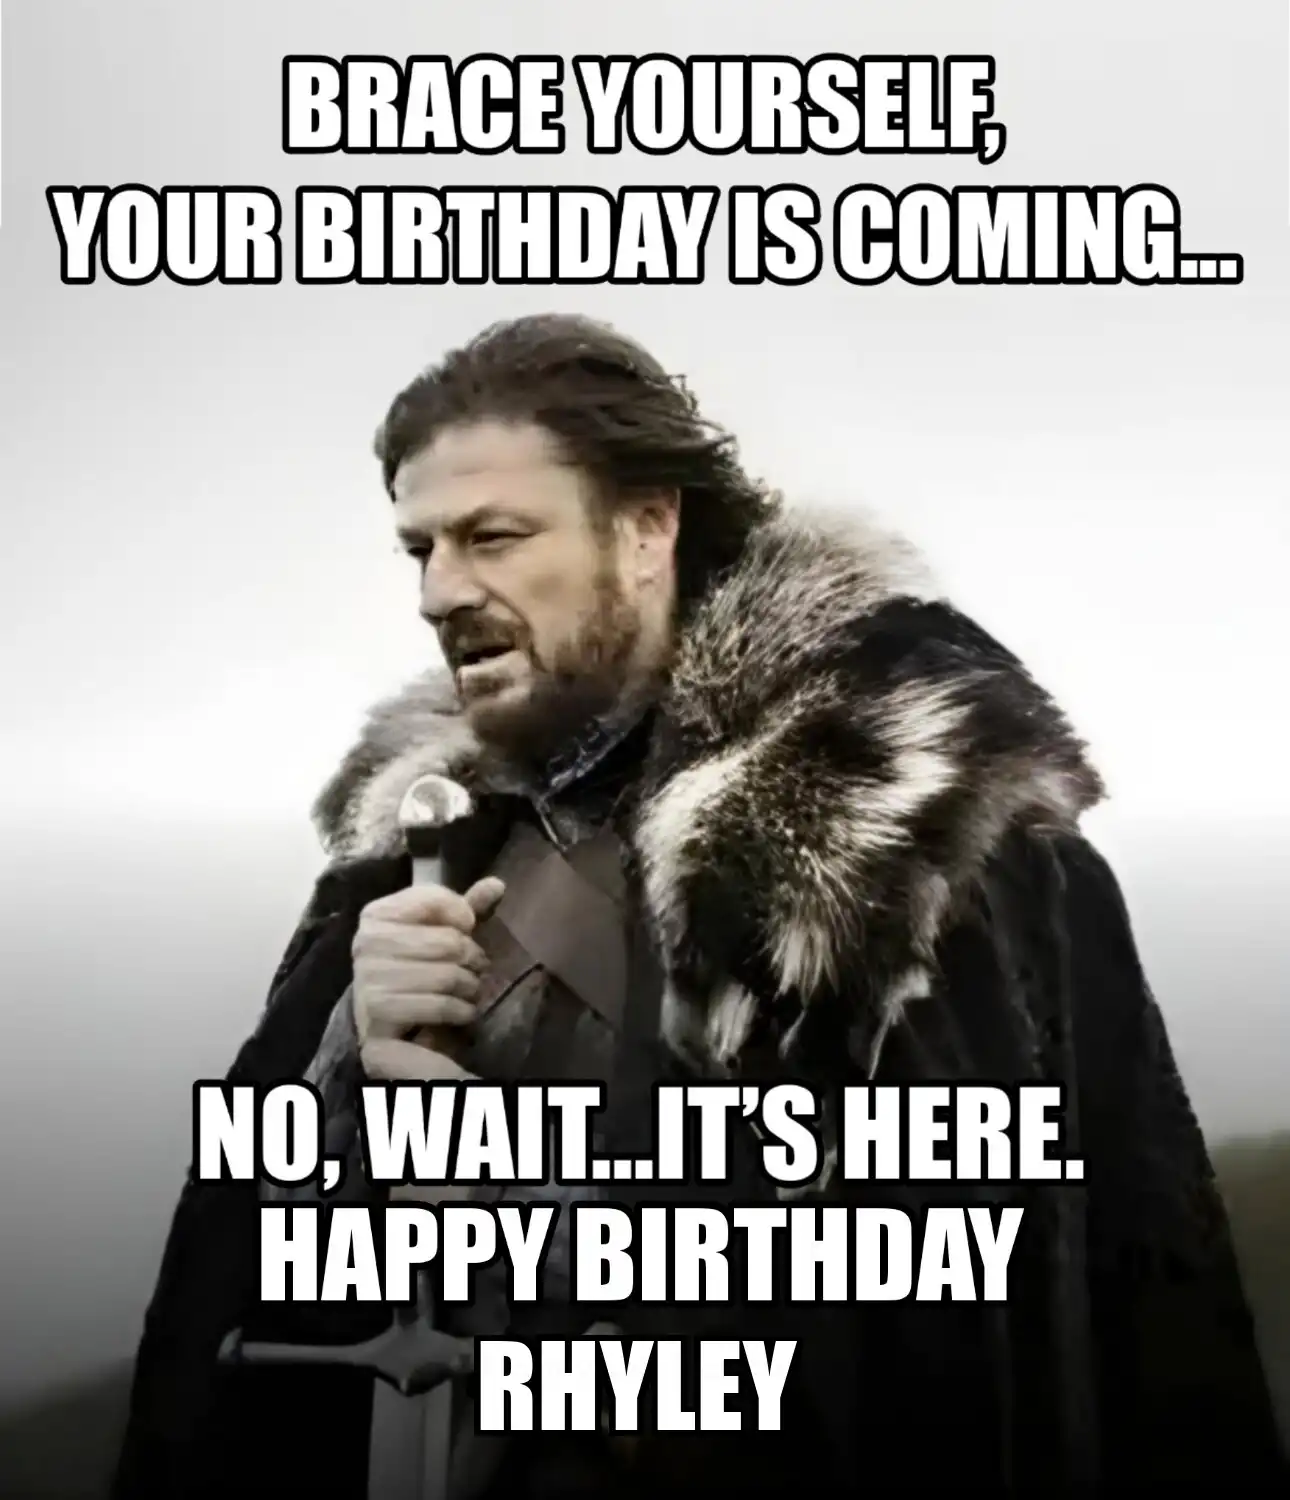 Happy Birthday Rhyley Brace Yourself Your Birthday Is Coming Meme